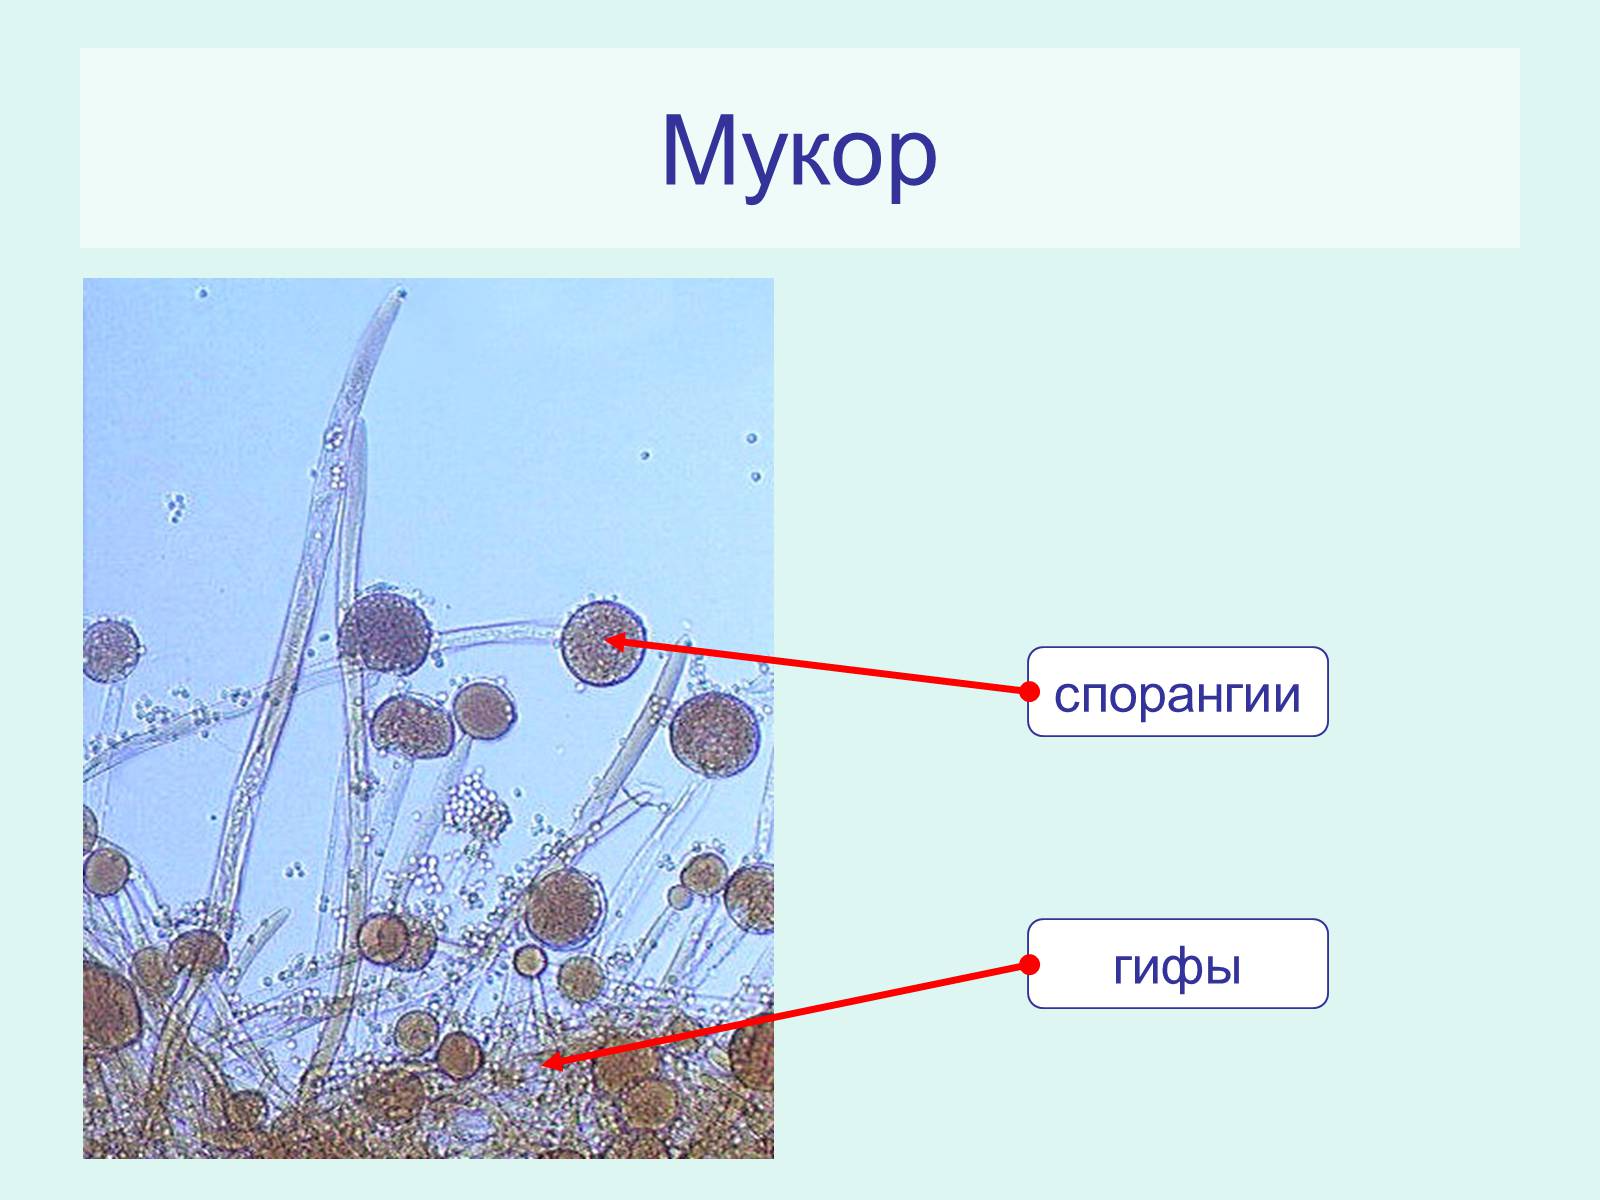 Мукор царство. Клетка гриба мукора под микроскопом. Плесень мукор под микроскопом строение. Гриб мукор строение под микроскопом. Мукор строение под микроскопом.